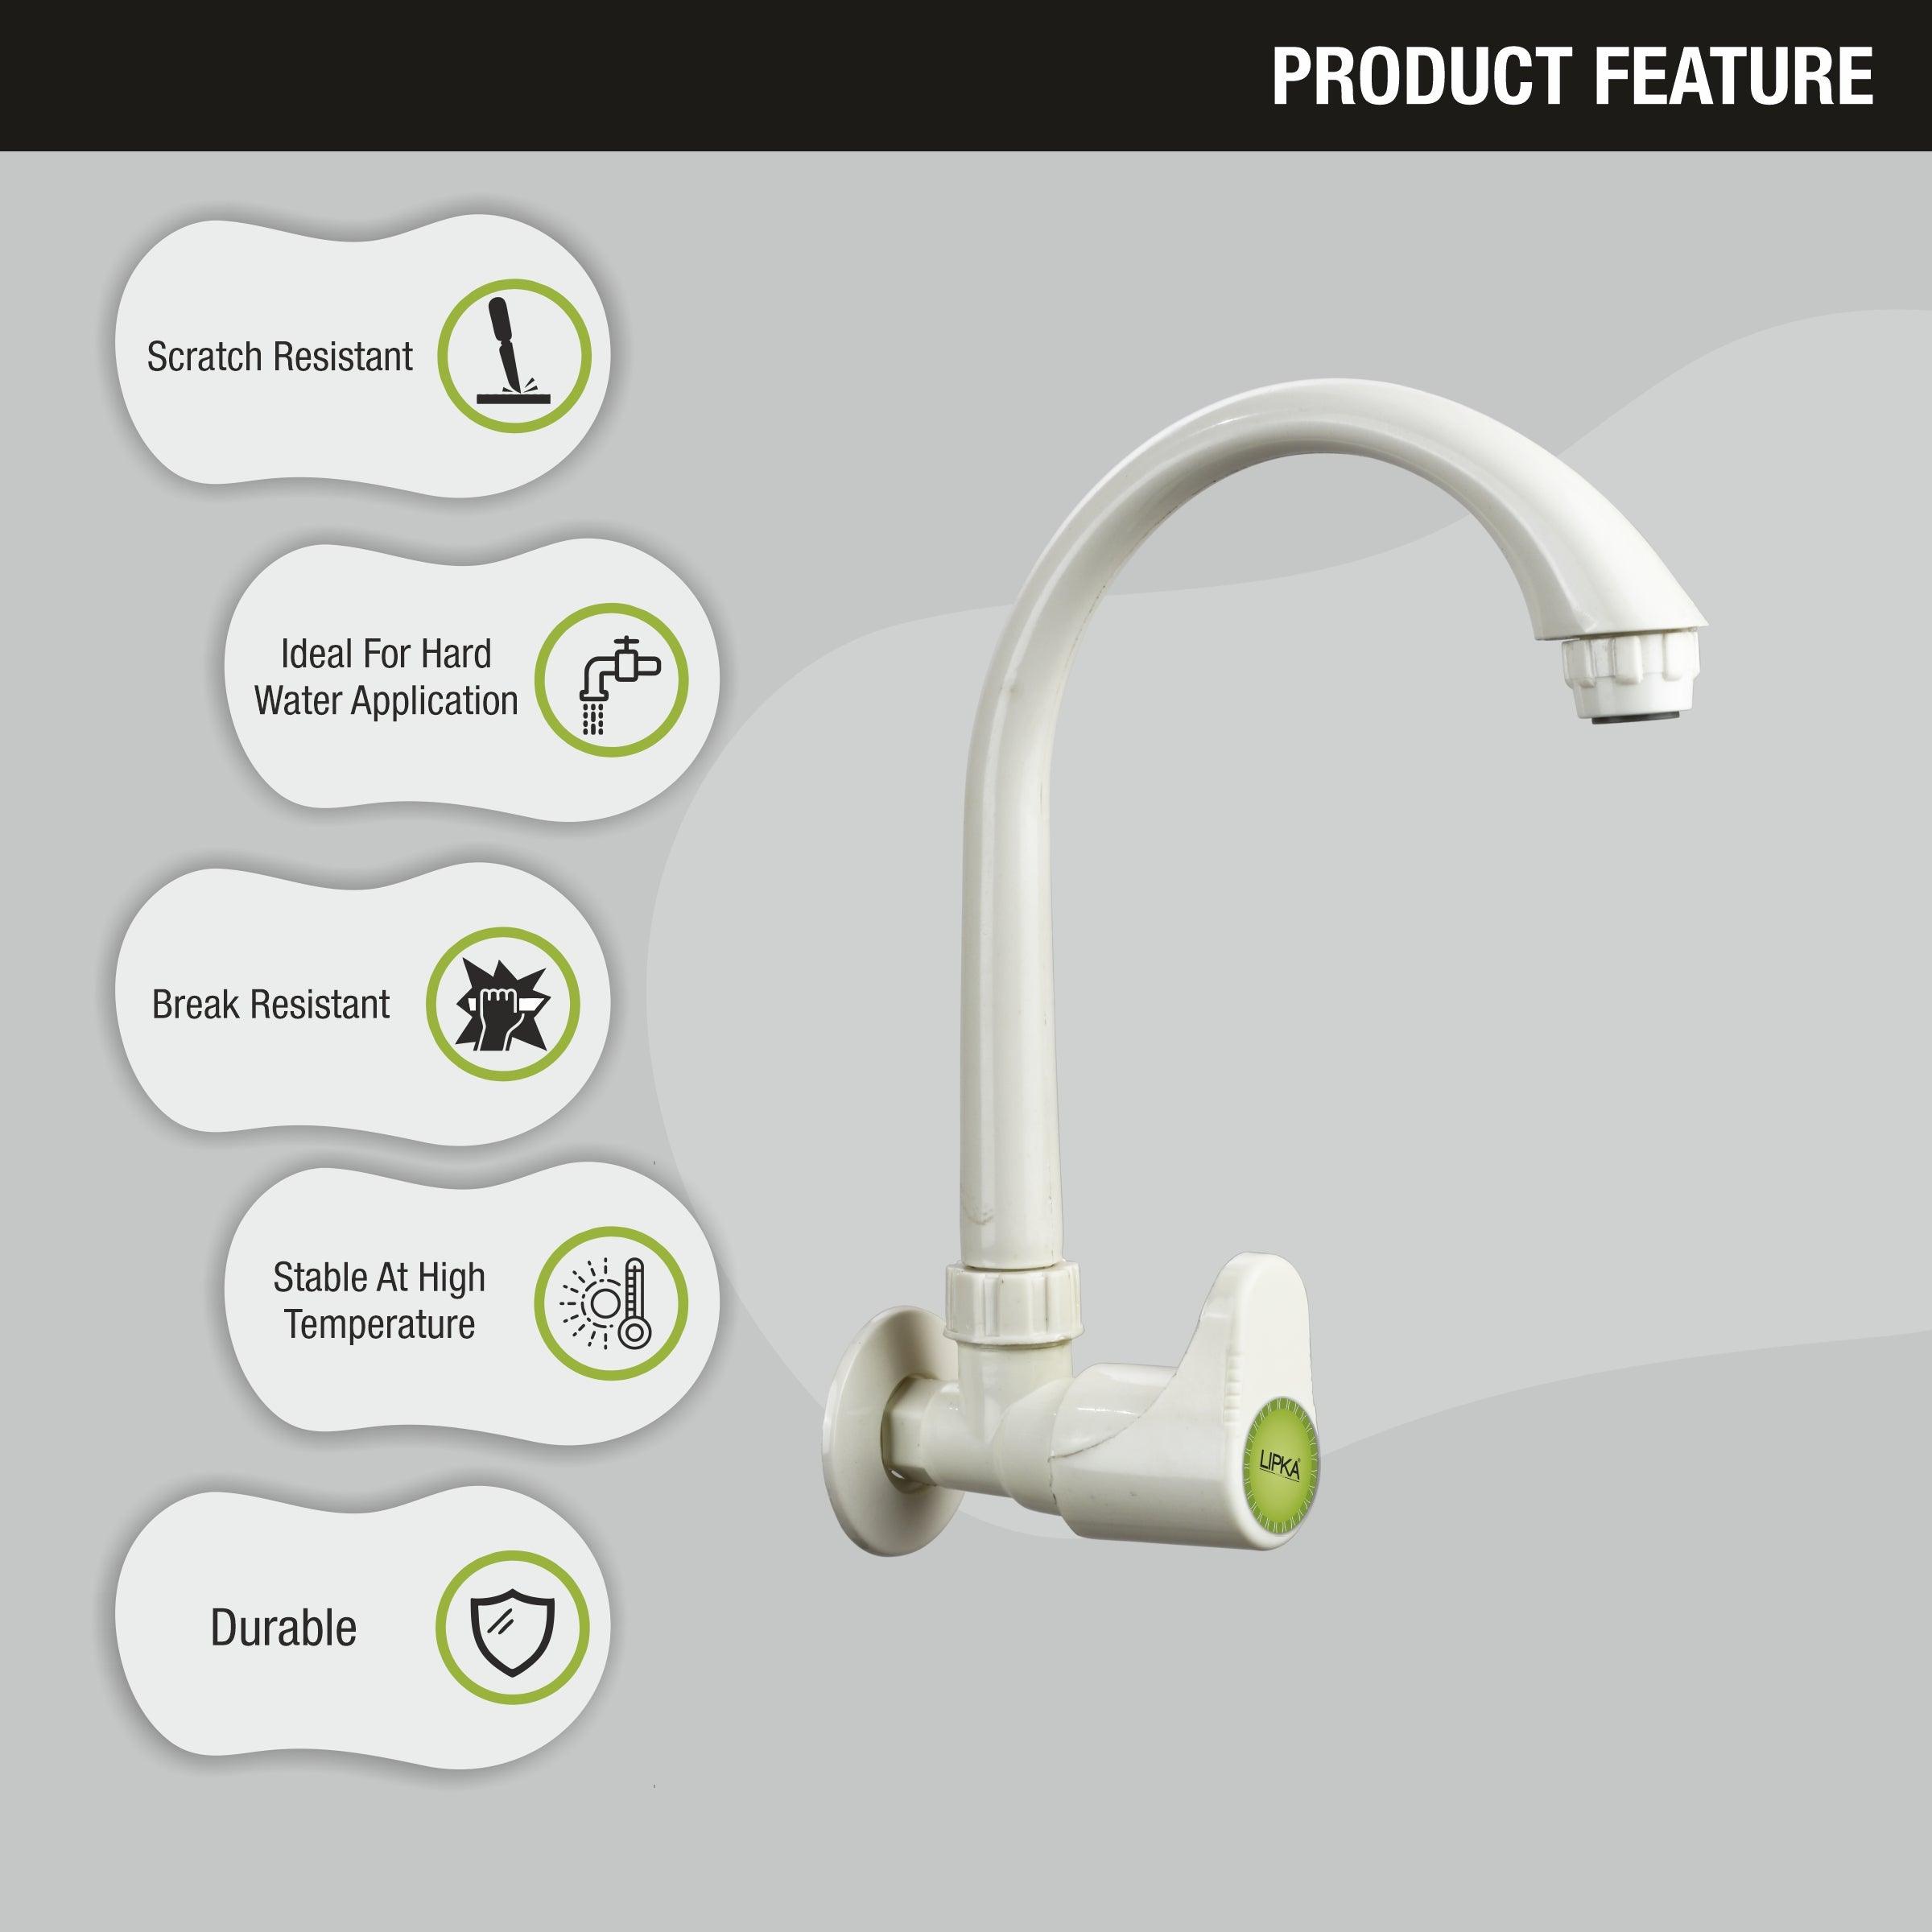 Designo Sink Tap with Swivel Spout PTMT Faucet features